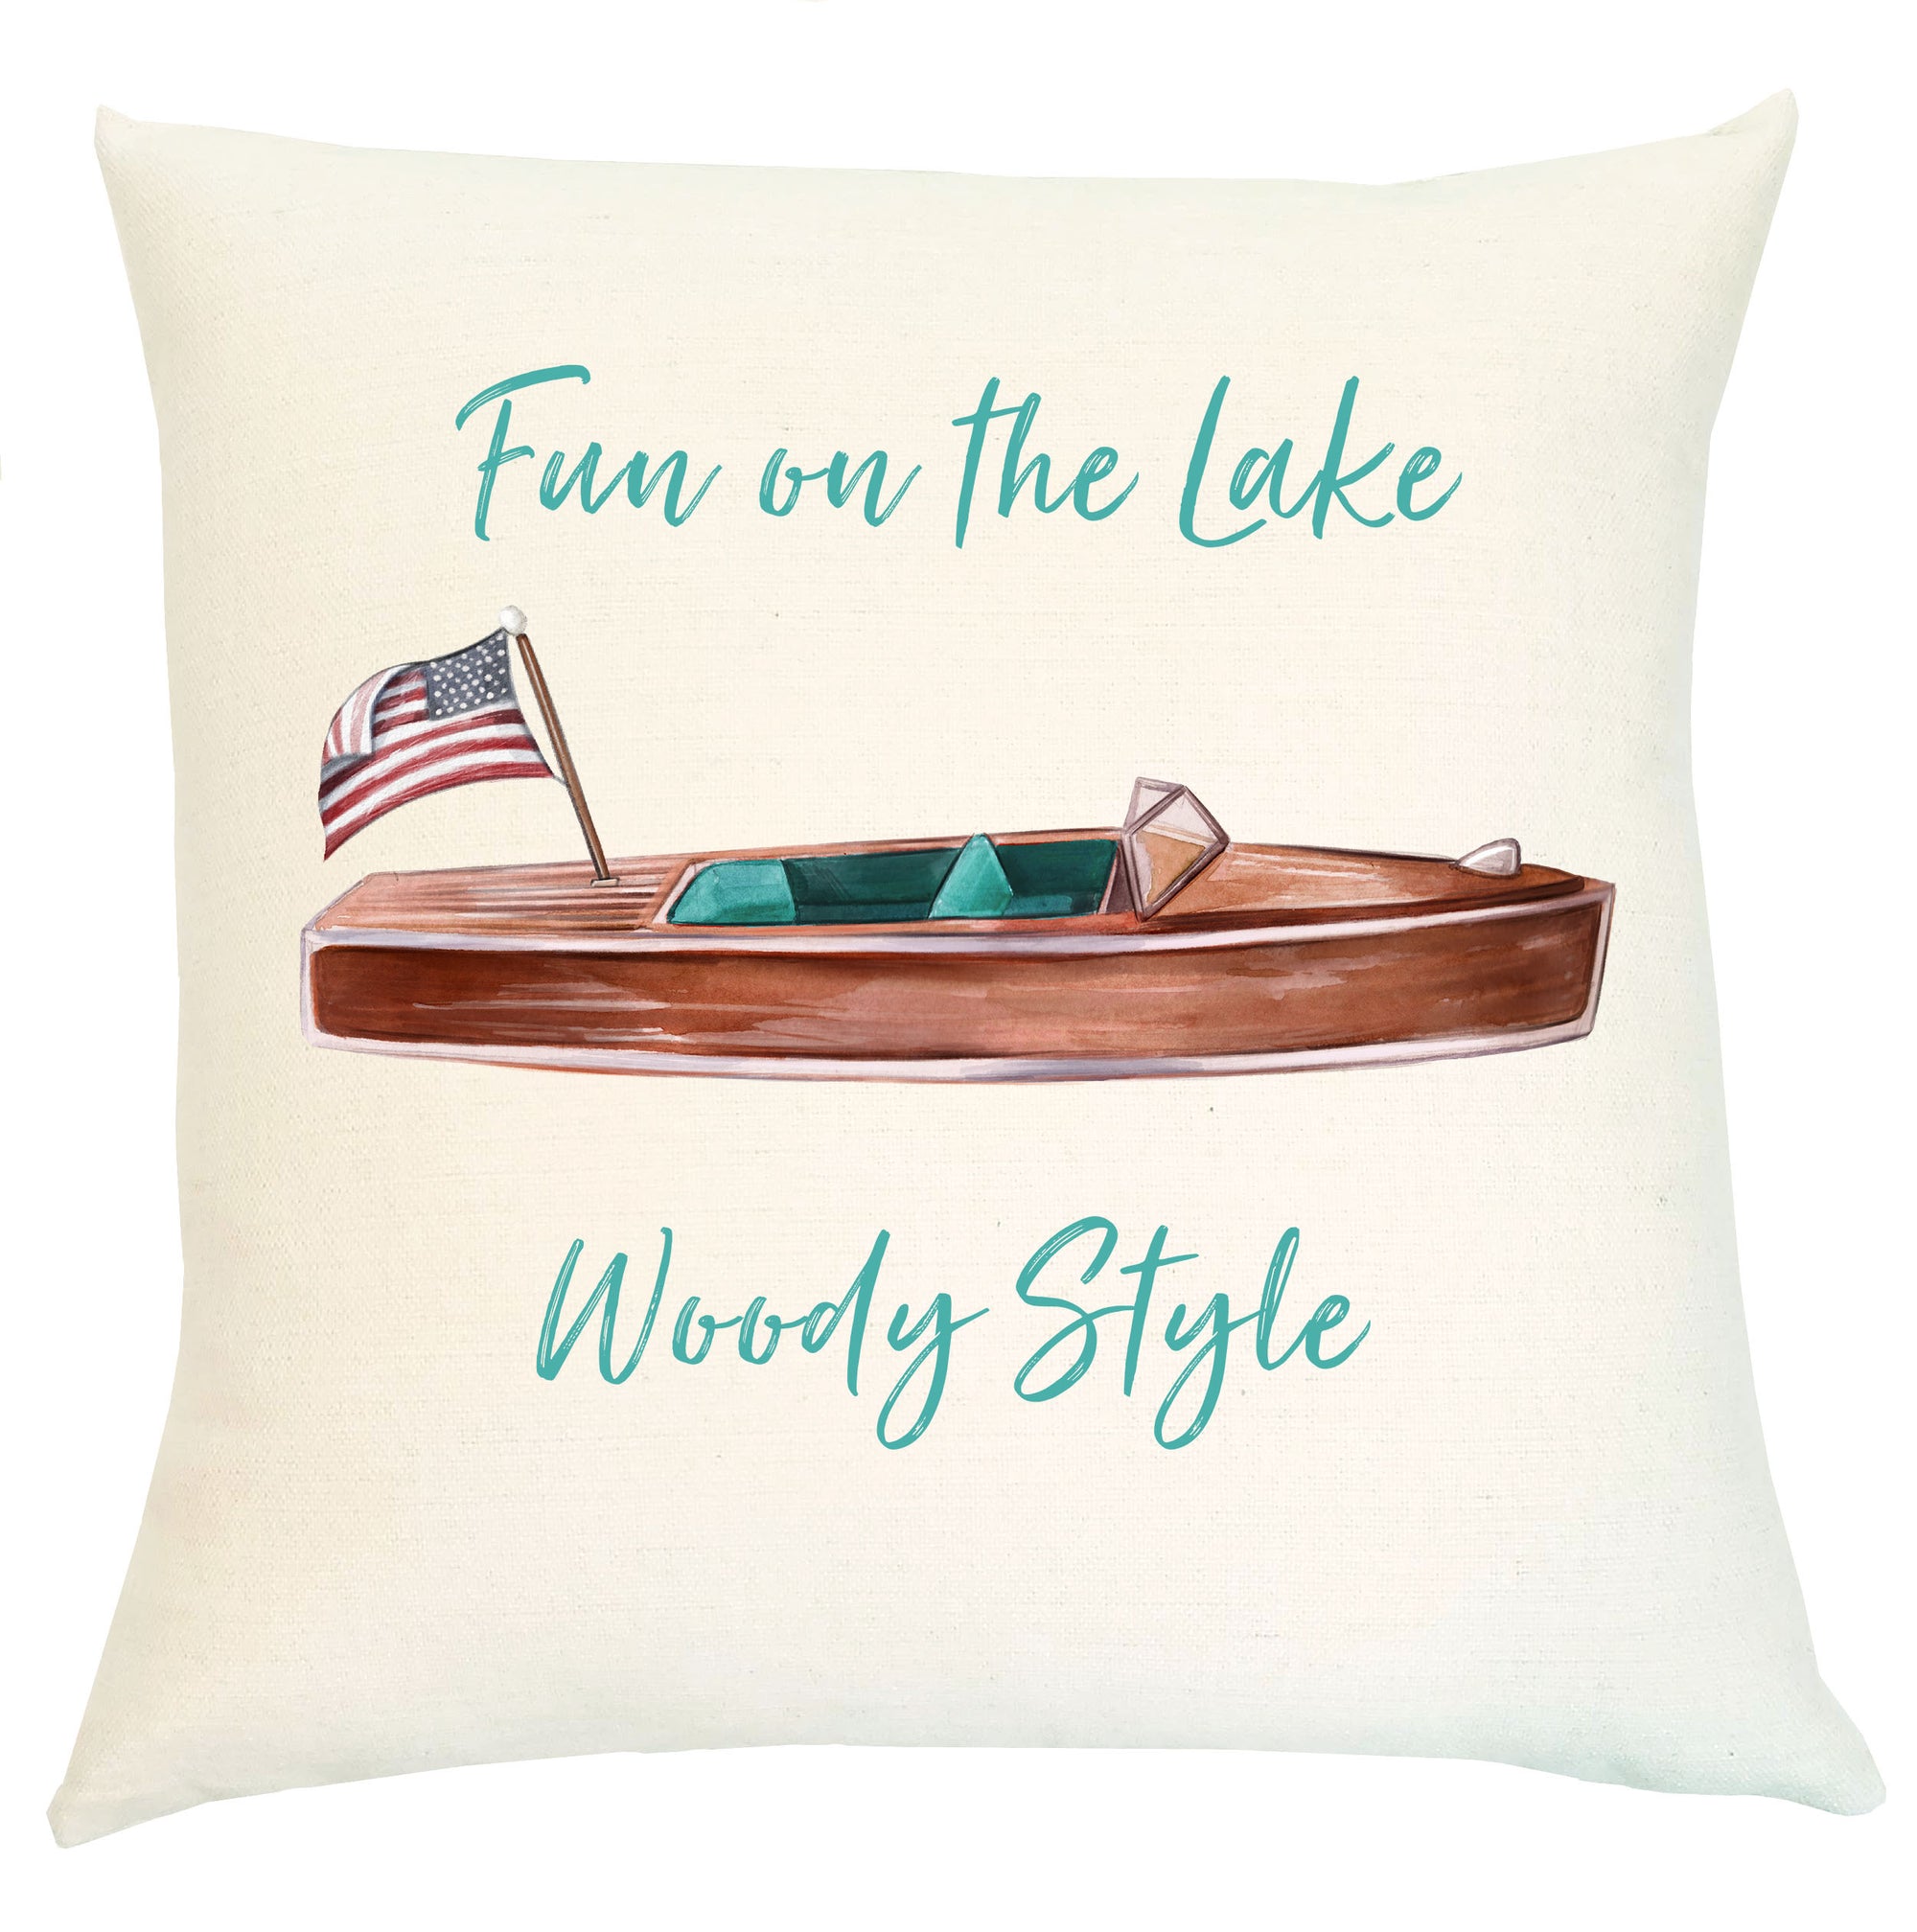 Pillow - Fun on the Lake "Woody Style"